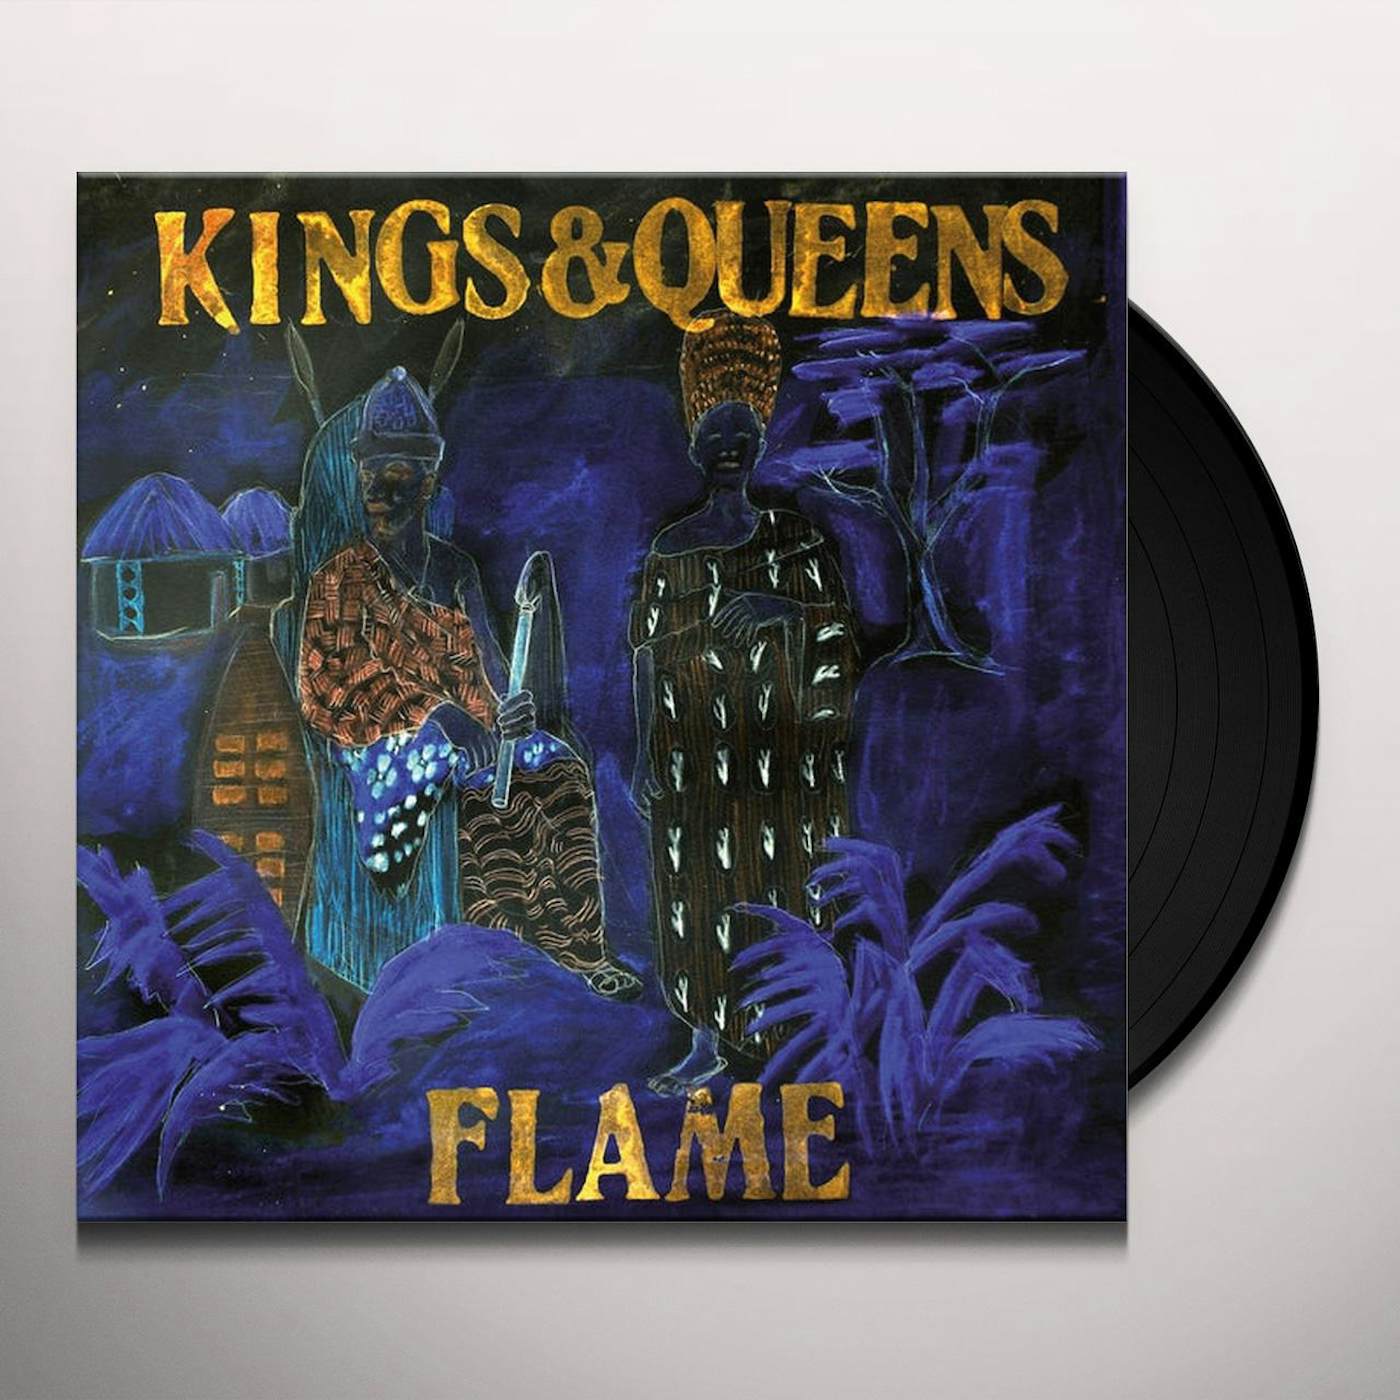 FLAME KINGS & QUEENS Vinyl Record